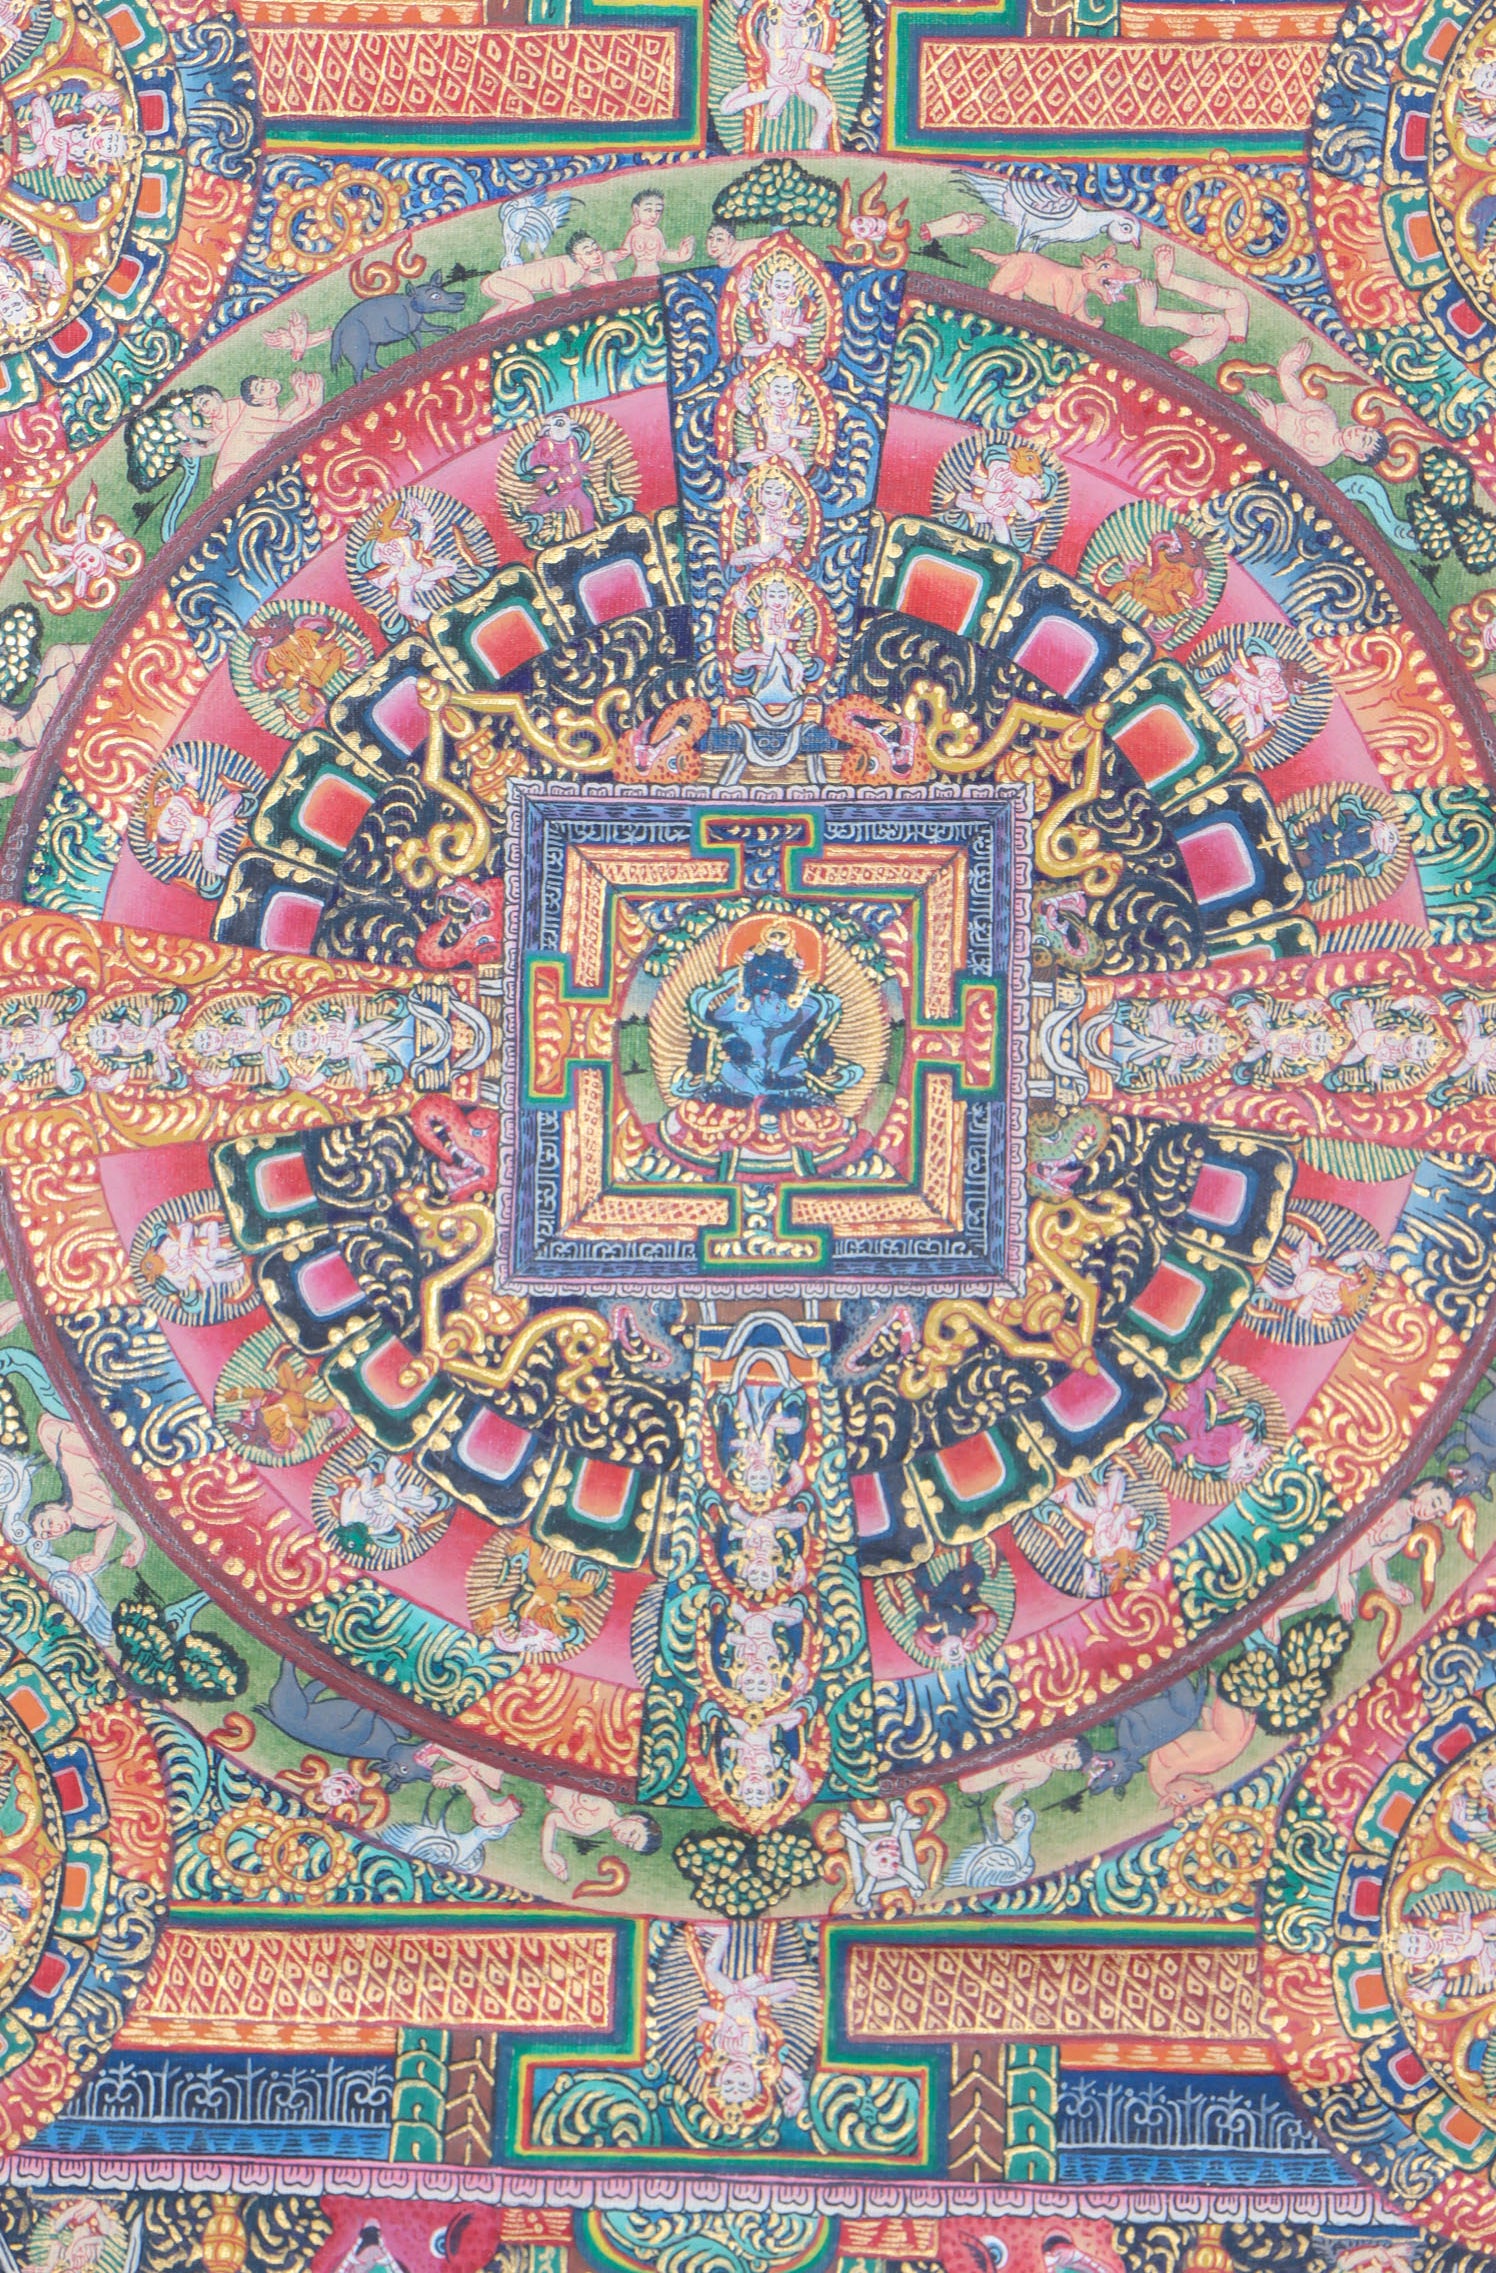  Vajradhara Mandala Thangka serves as a visual illustration to focus meditation and contemplation around the idea of enlightenment.